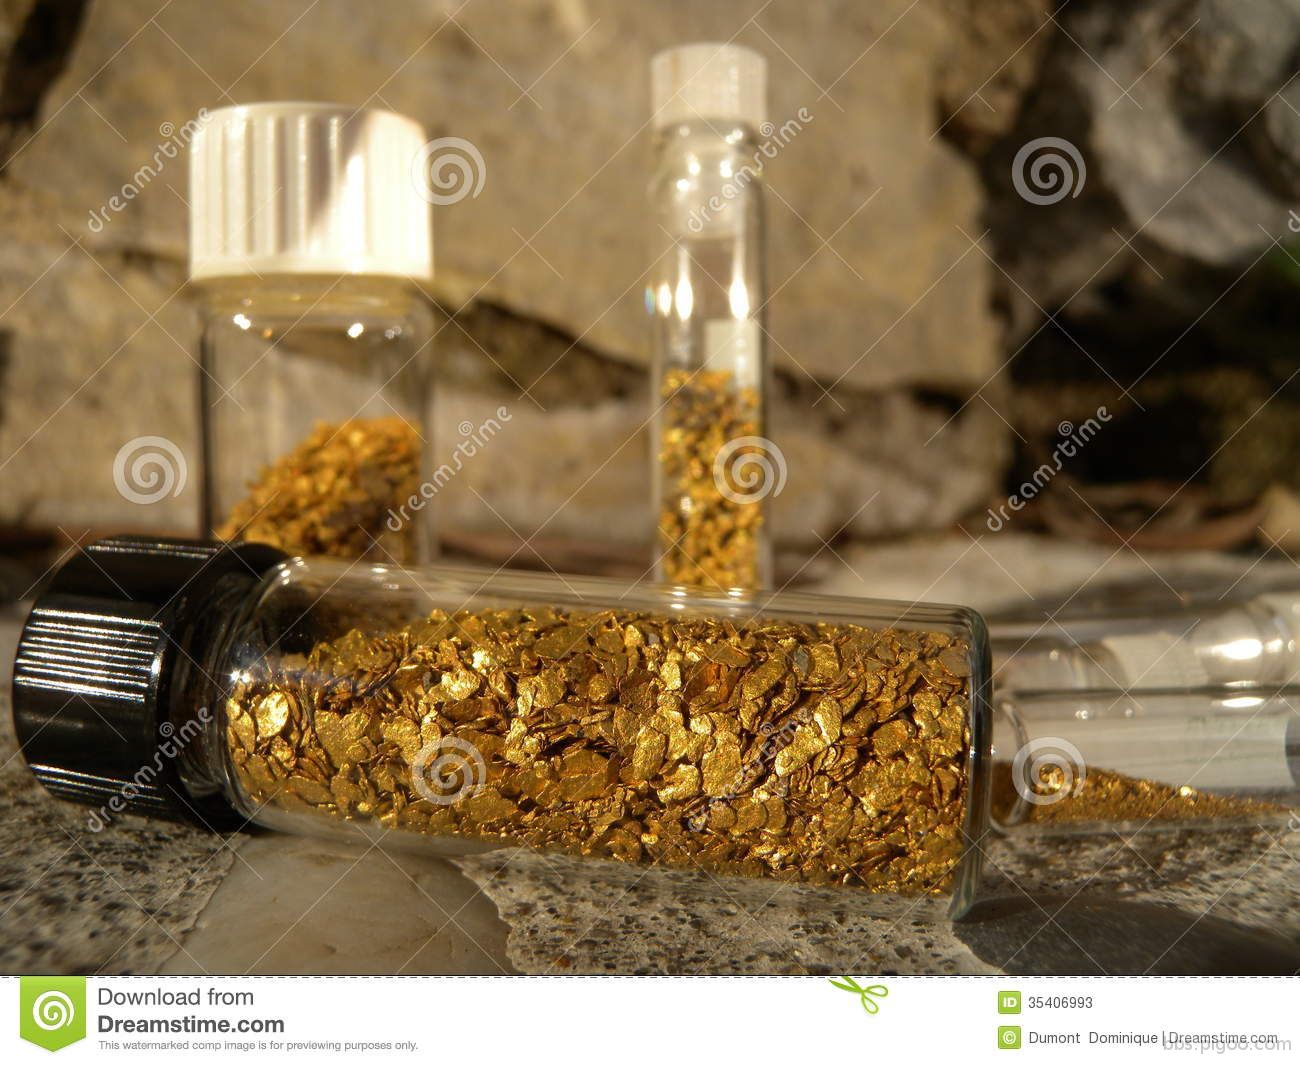 gold-flakes-vials-natural-found-panning-river-france-35406993.jpg